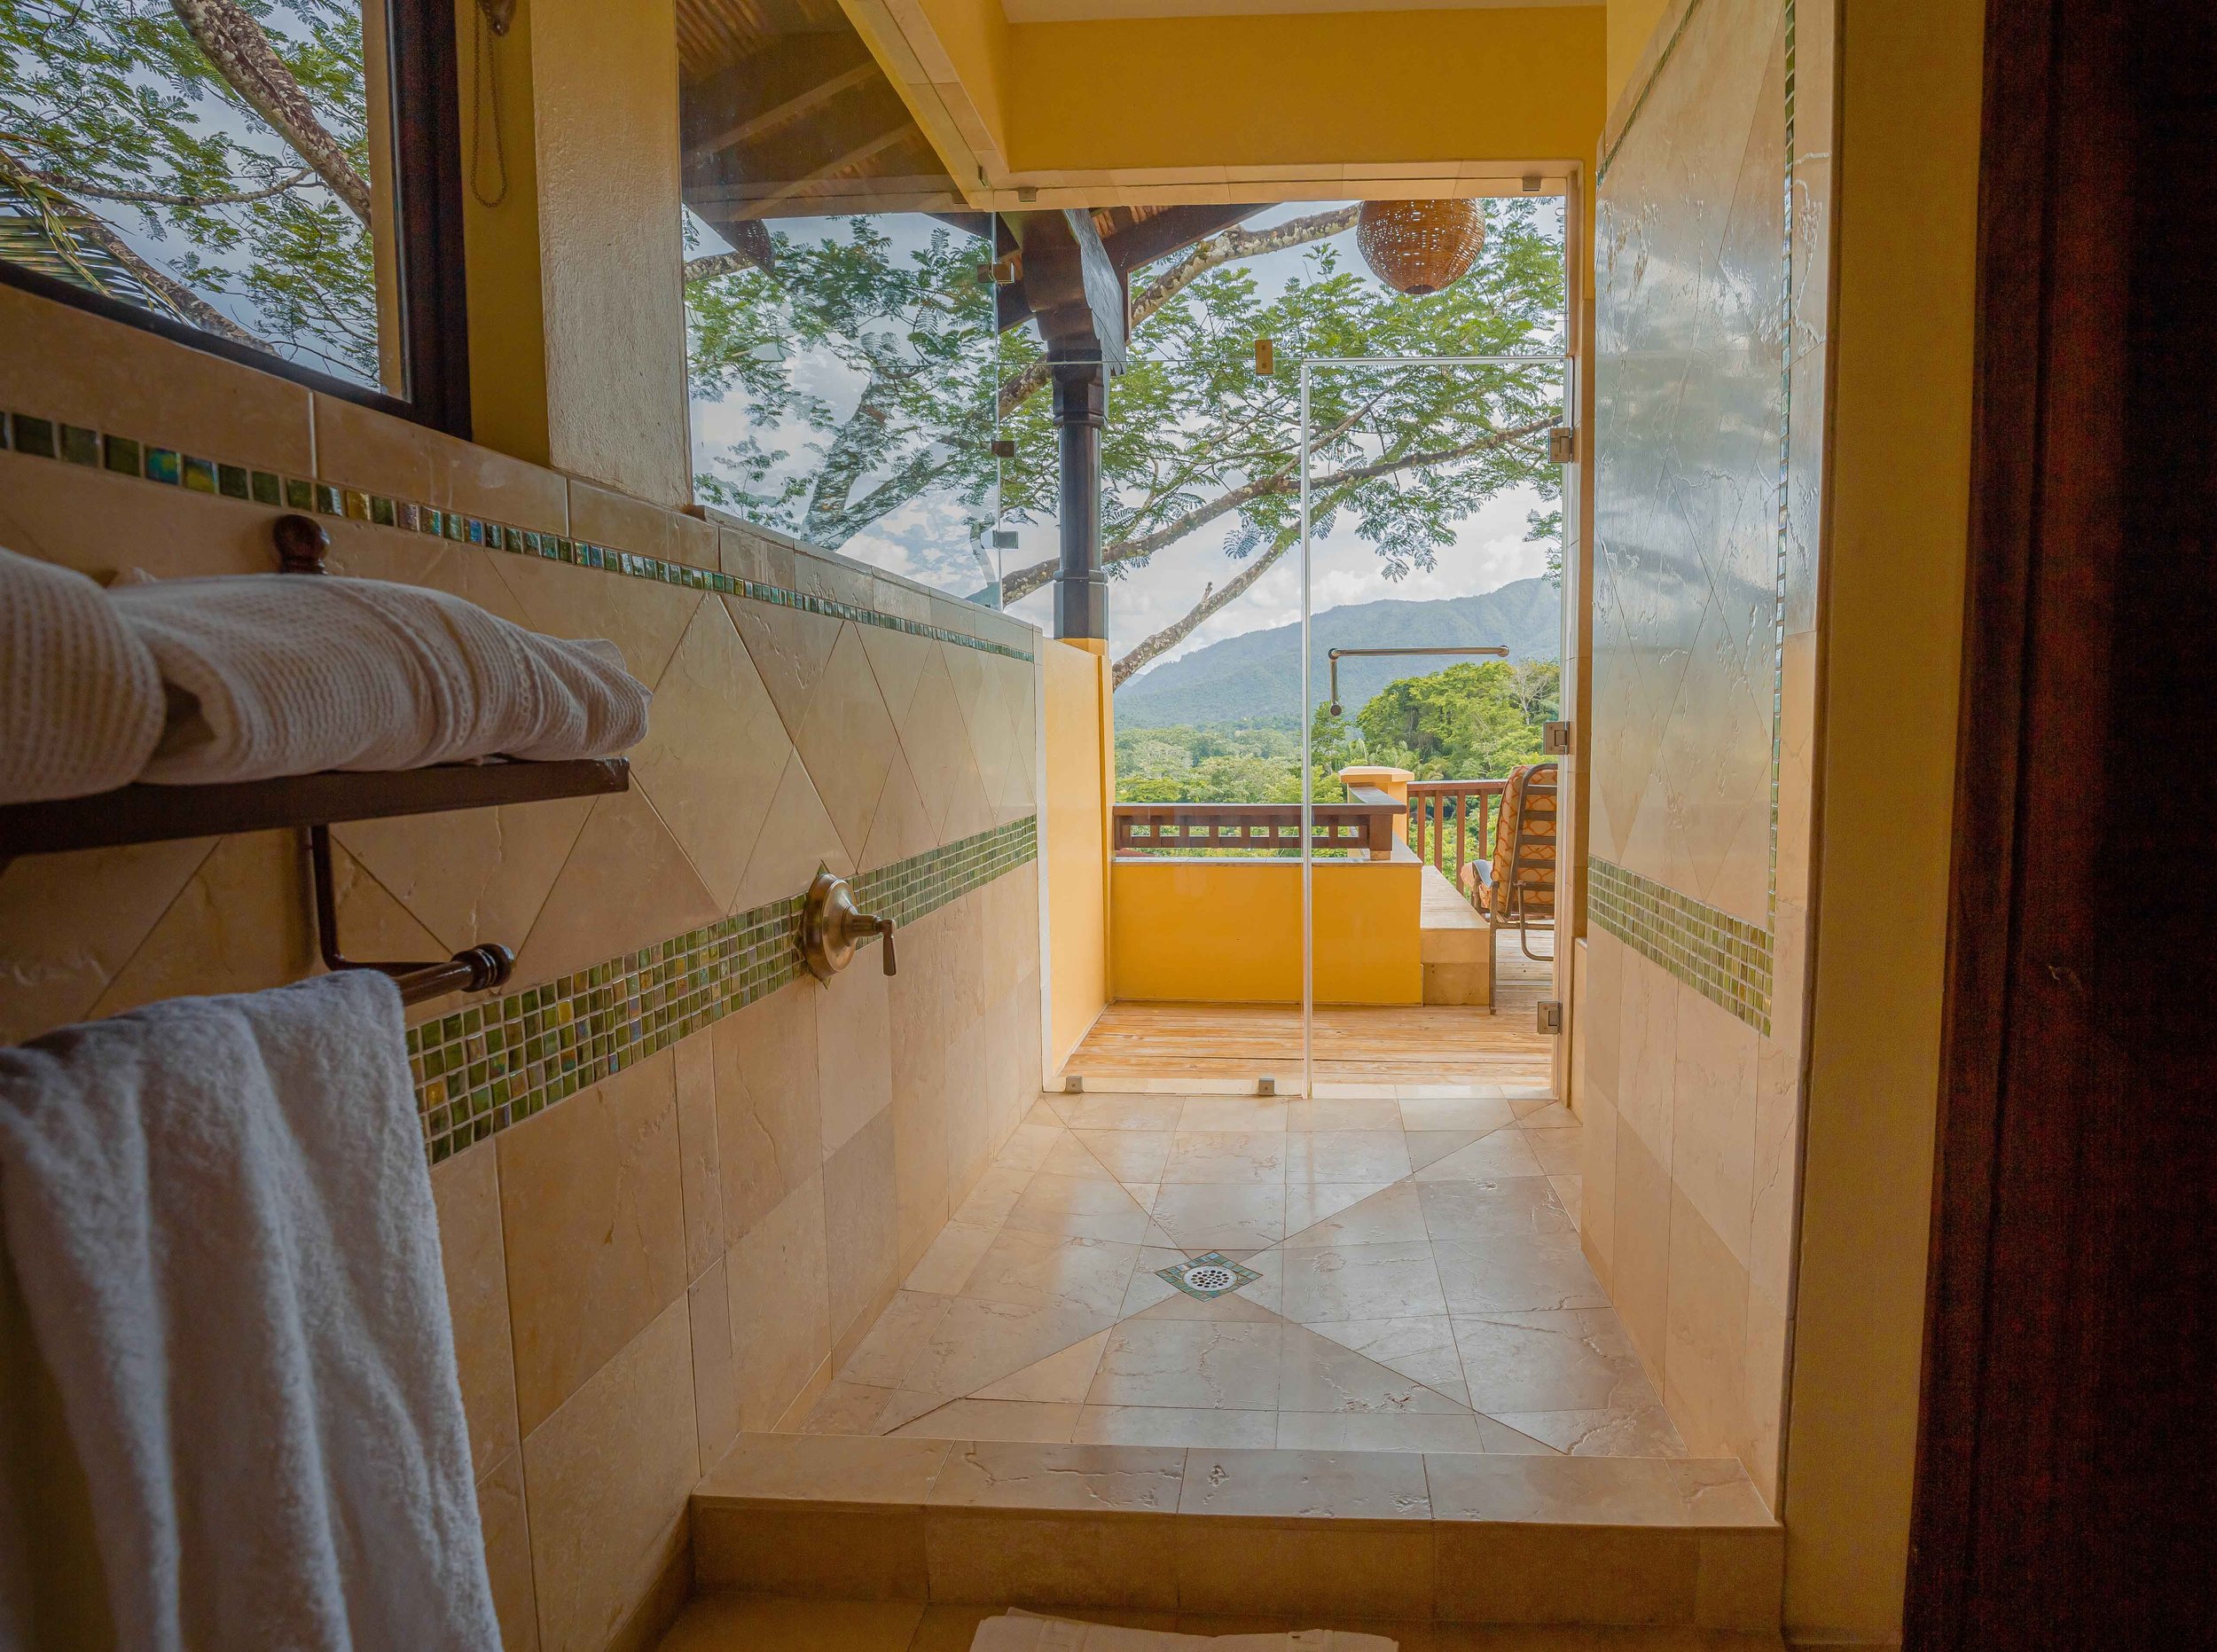 Belize Hotel | Sleeping Giant Rainforest Lodge